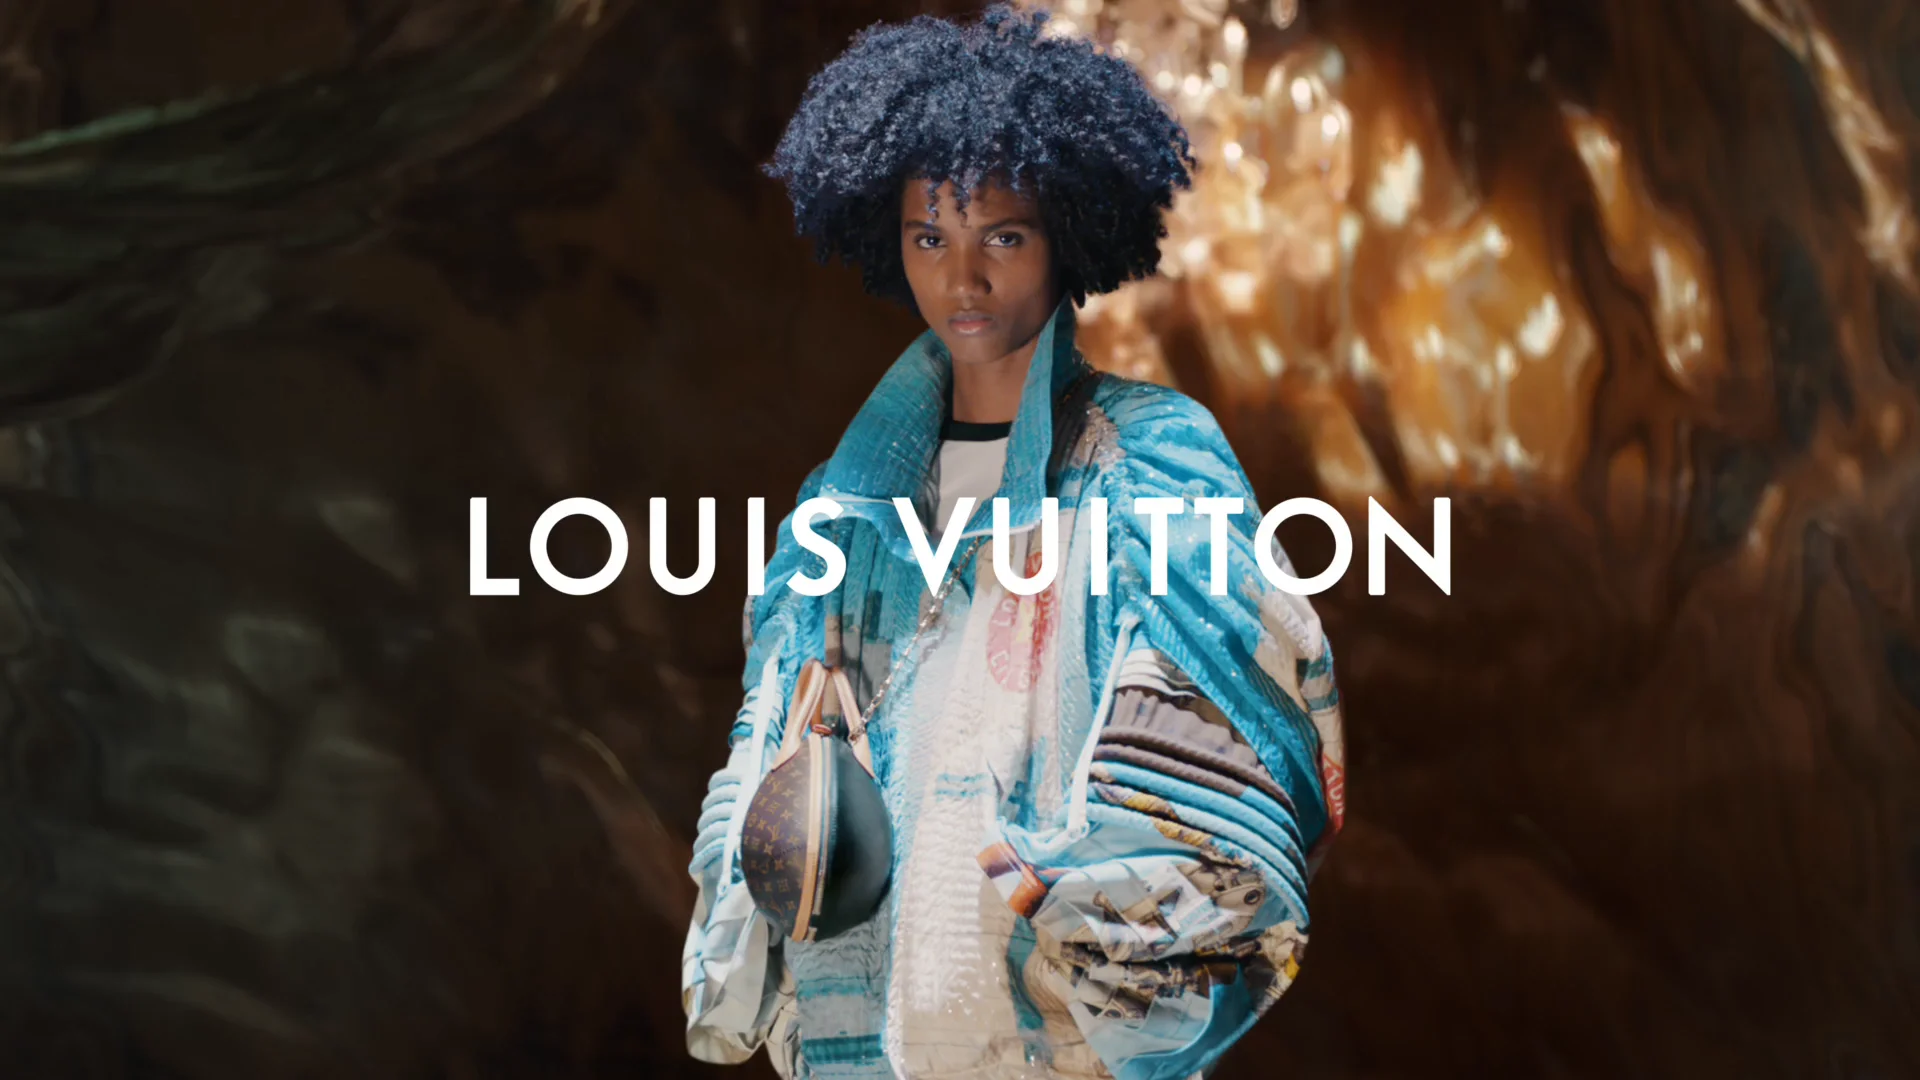 Livestream: Watch Louis Vuitton's Spring/Summer 2019 women's